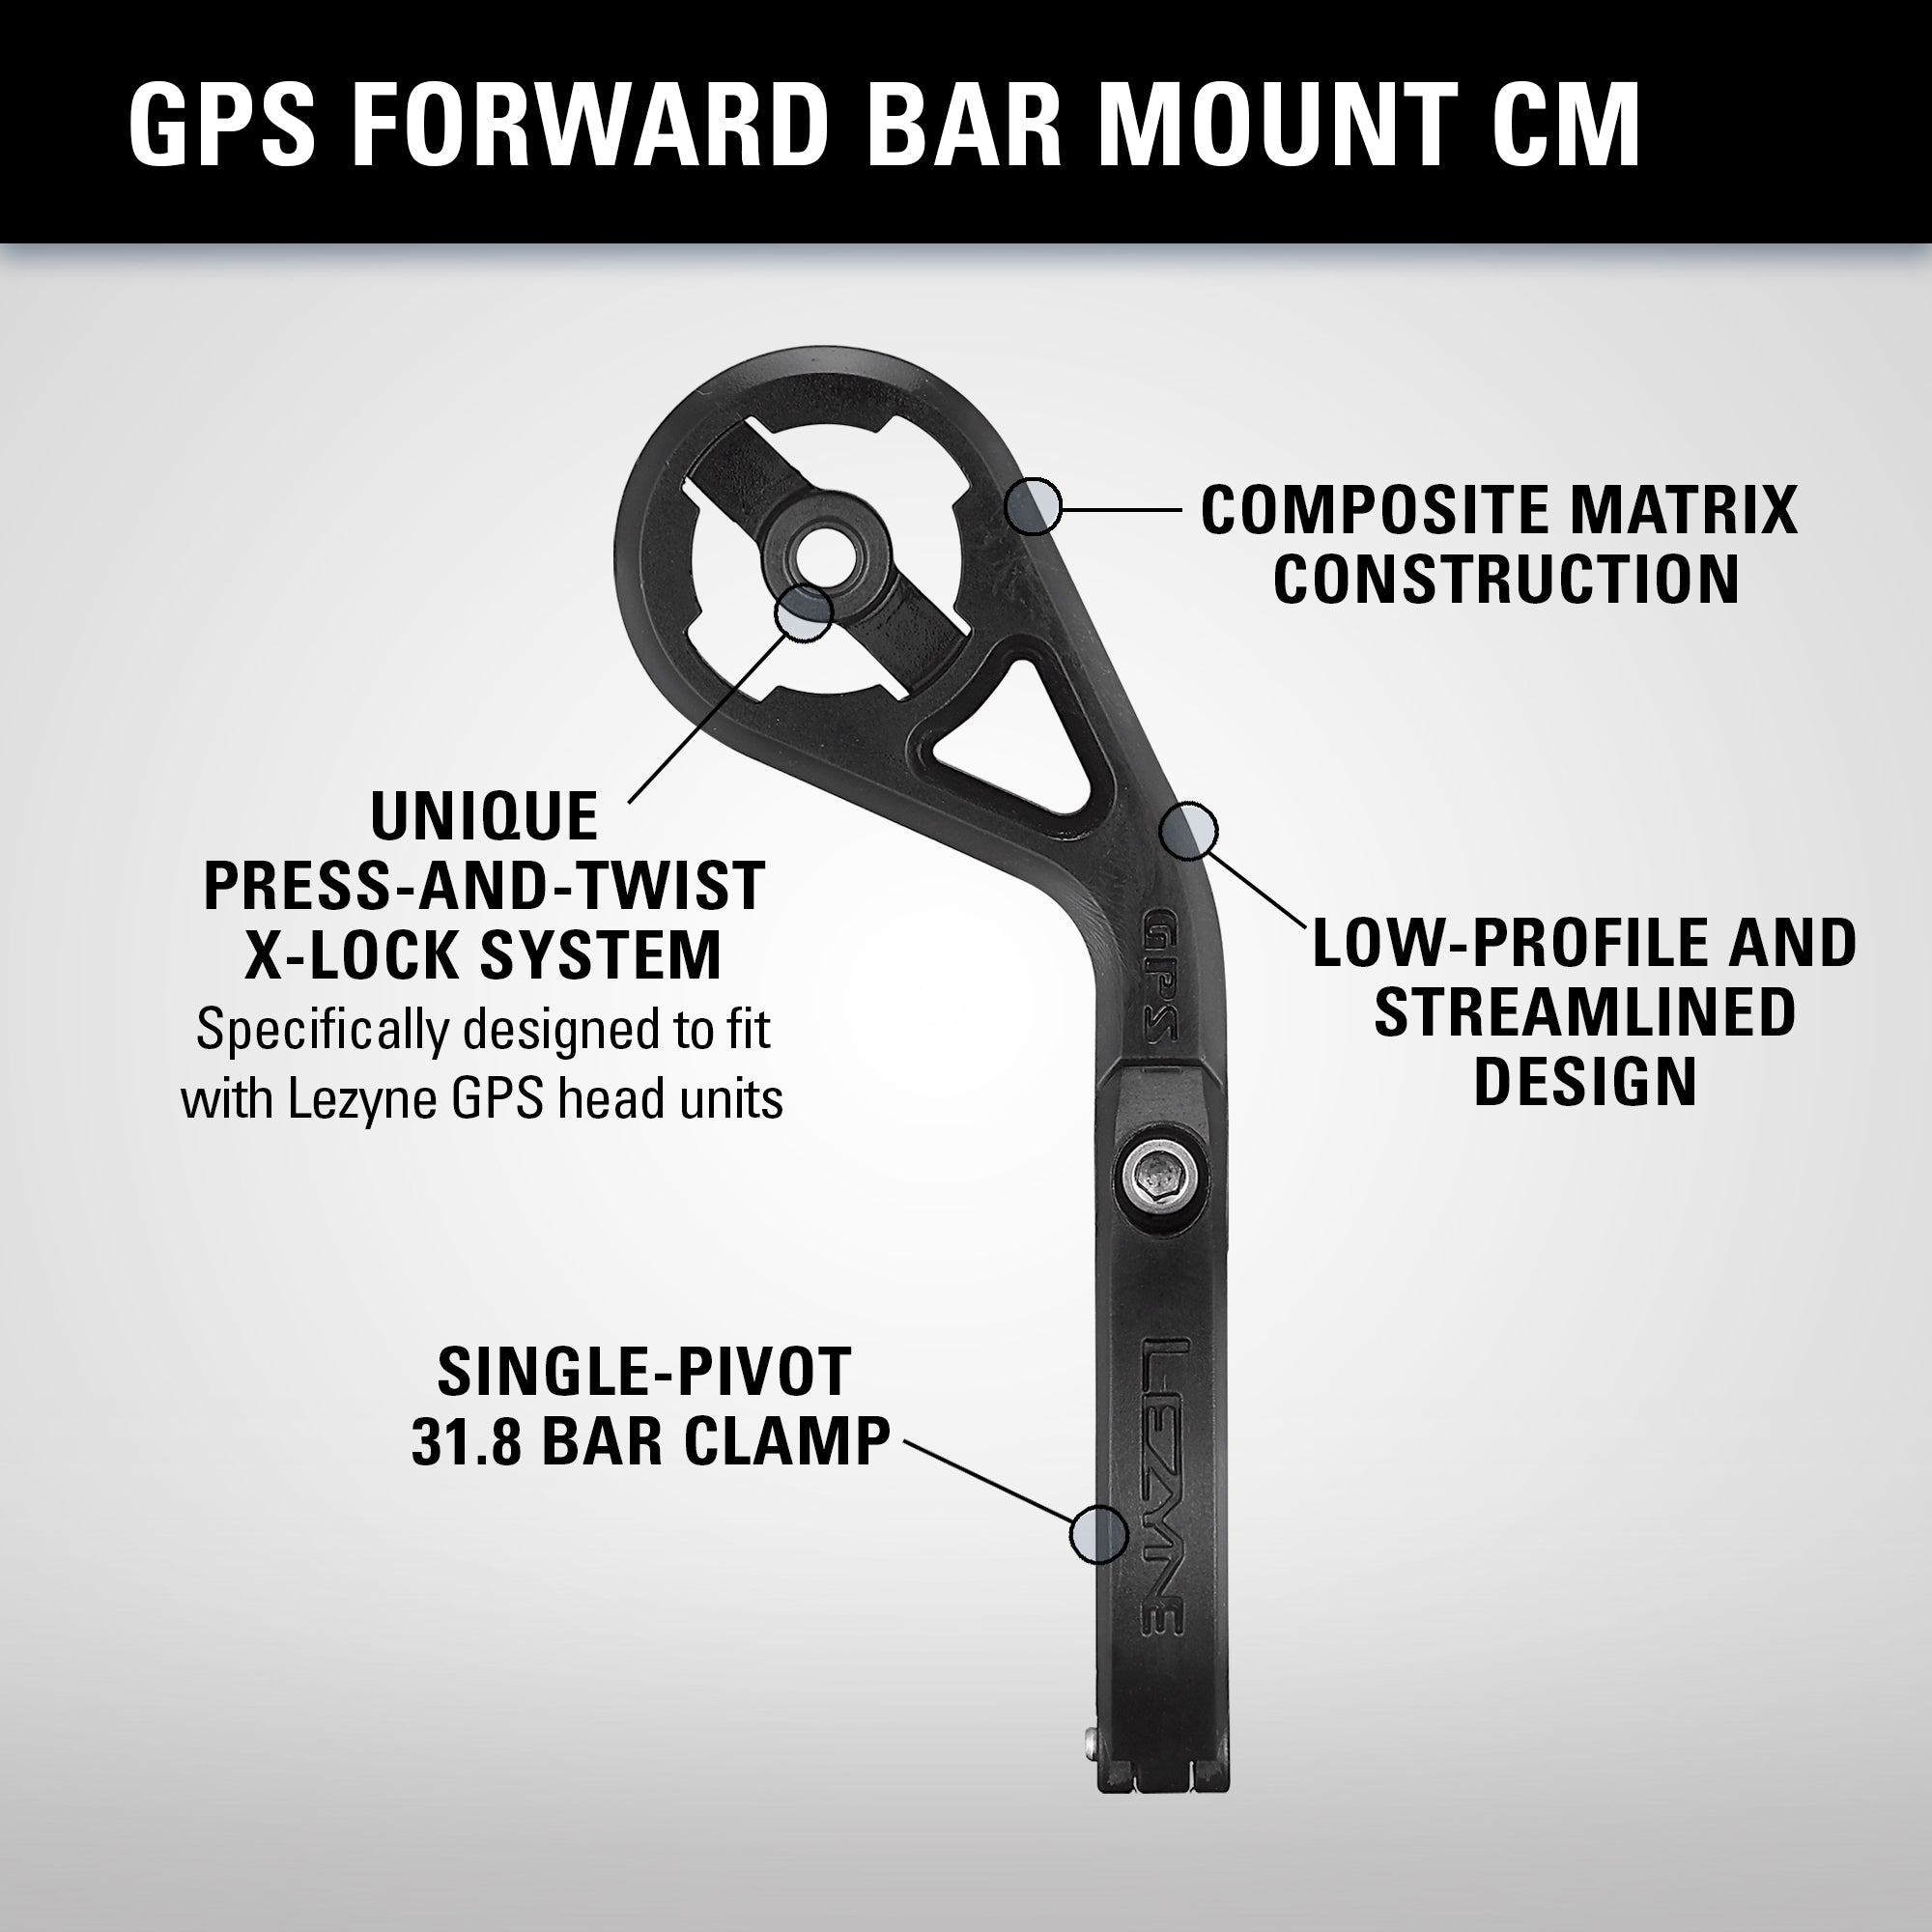 GPS FORWARD BAR MOUNT CM